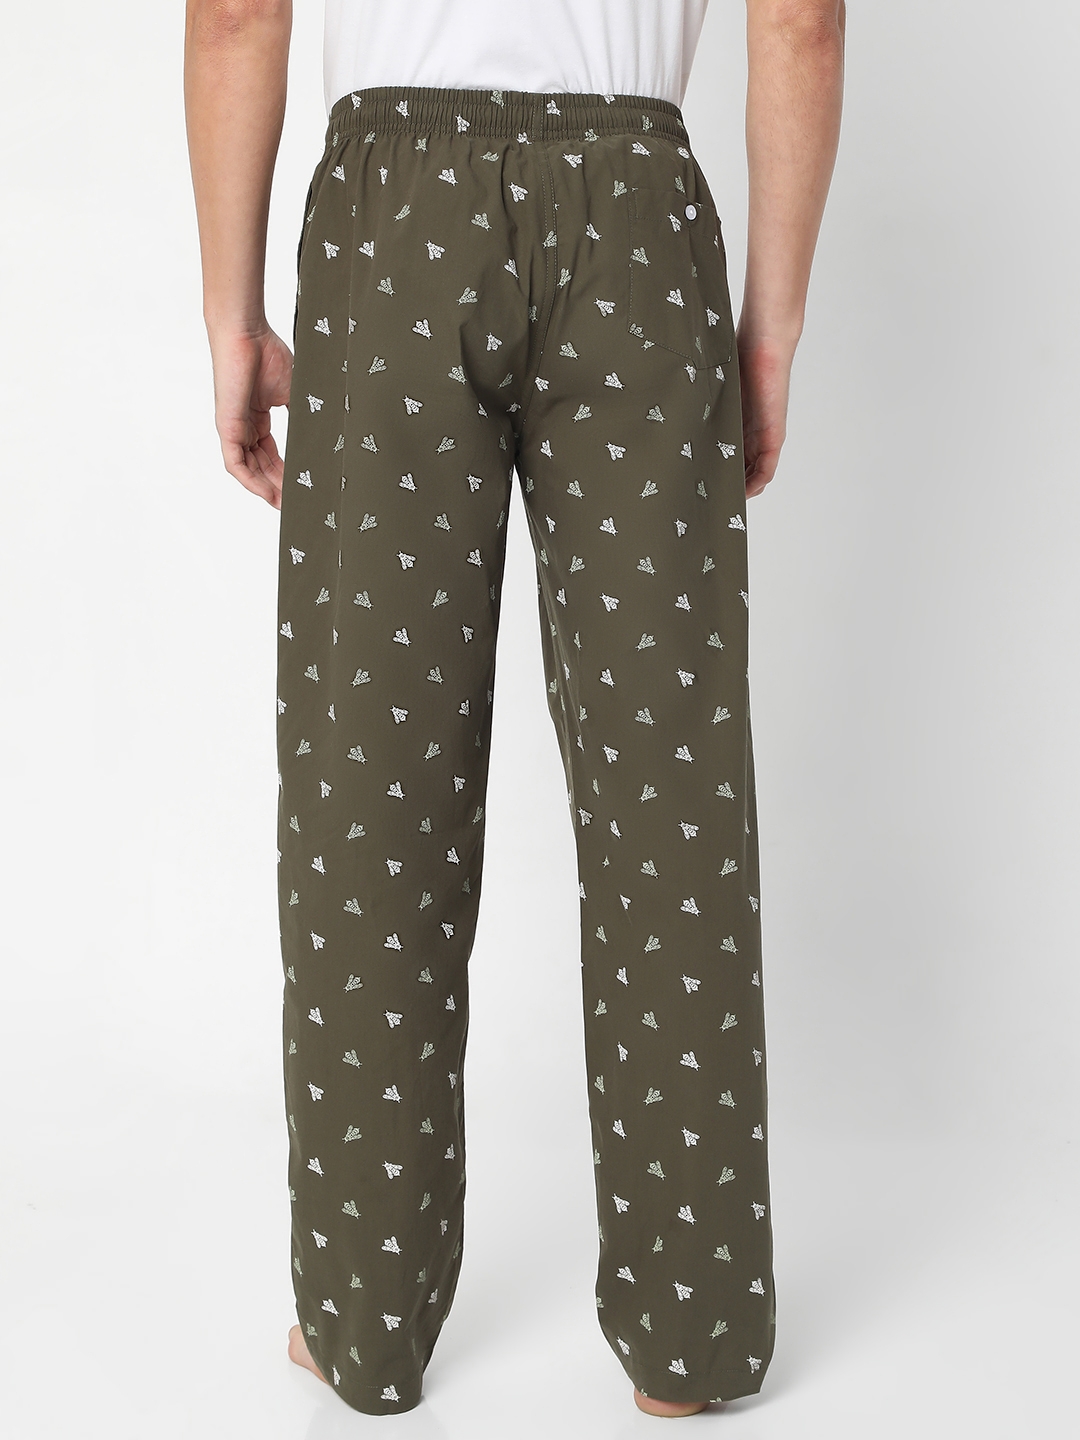 Underjeans by Spykar Men Olive Cotton Printed Pyjama